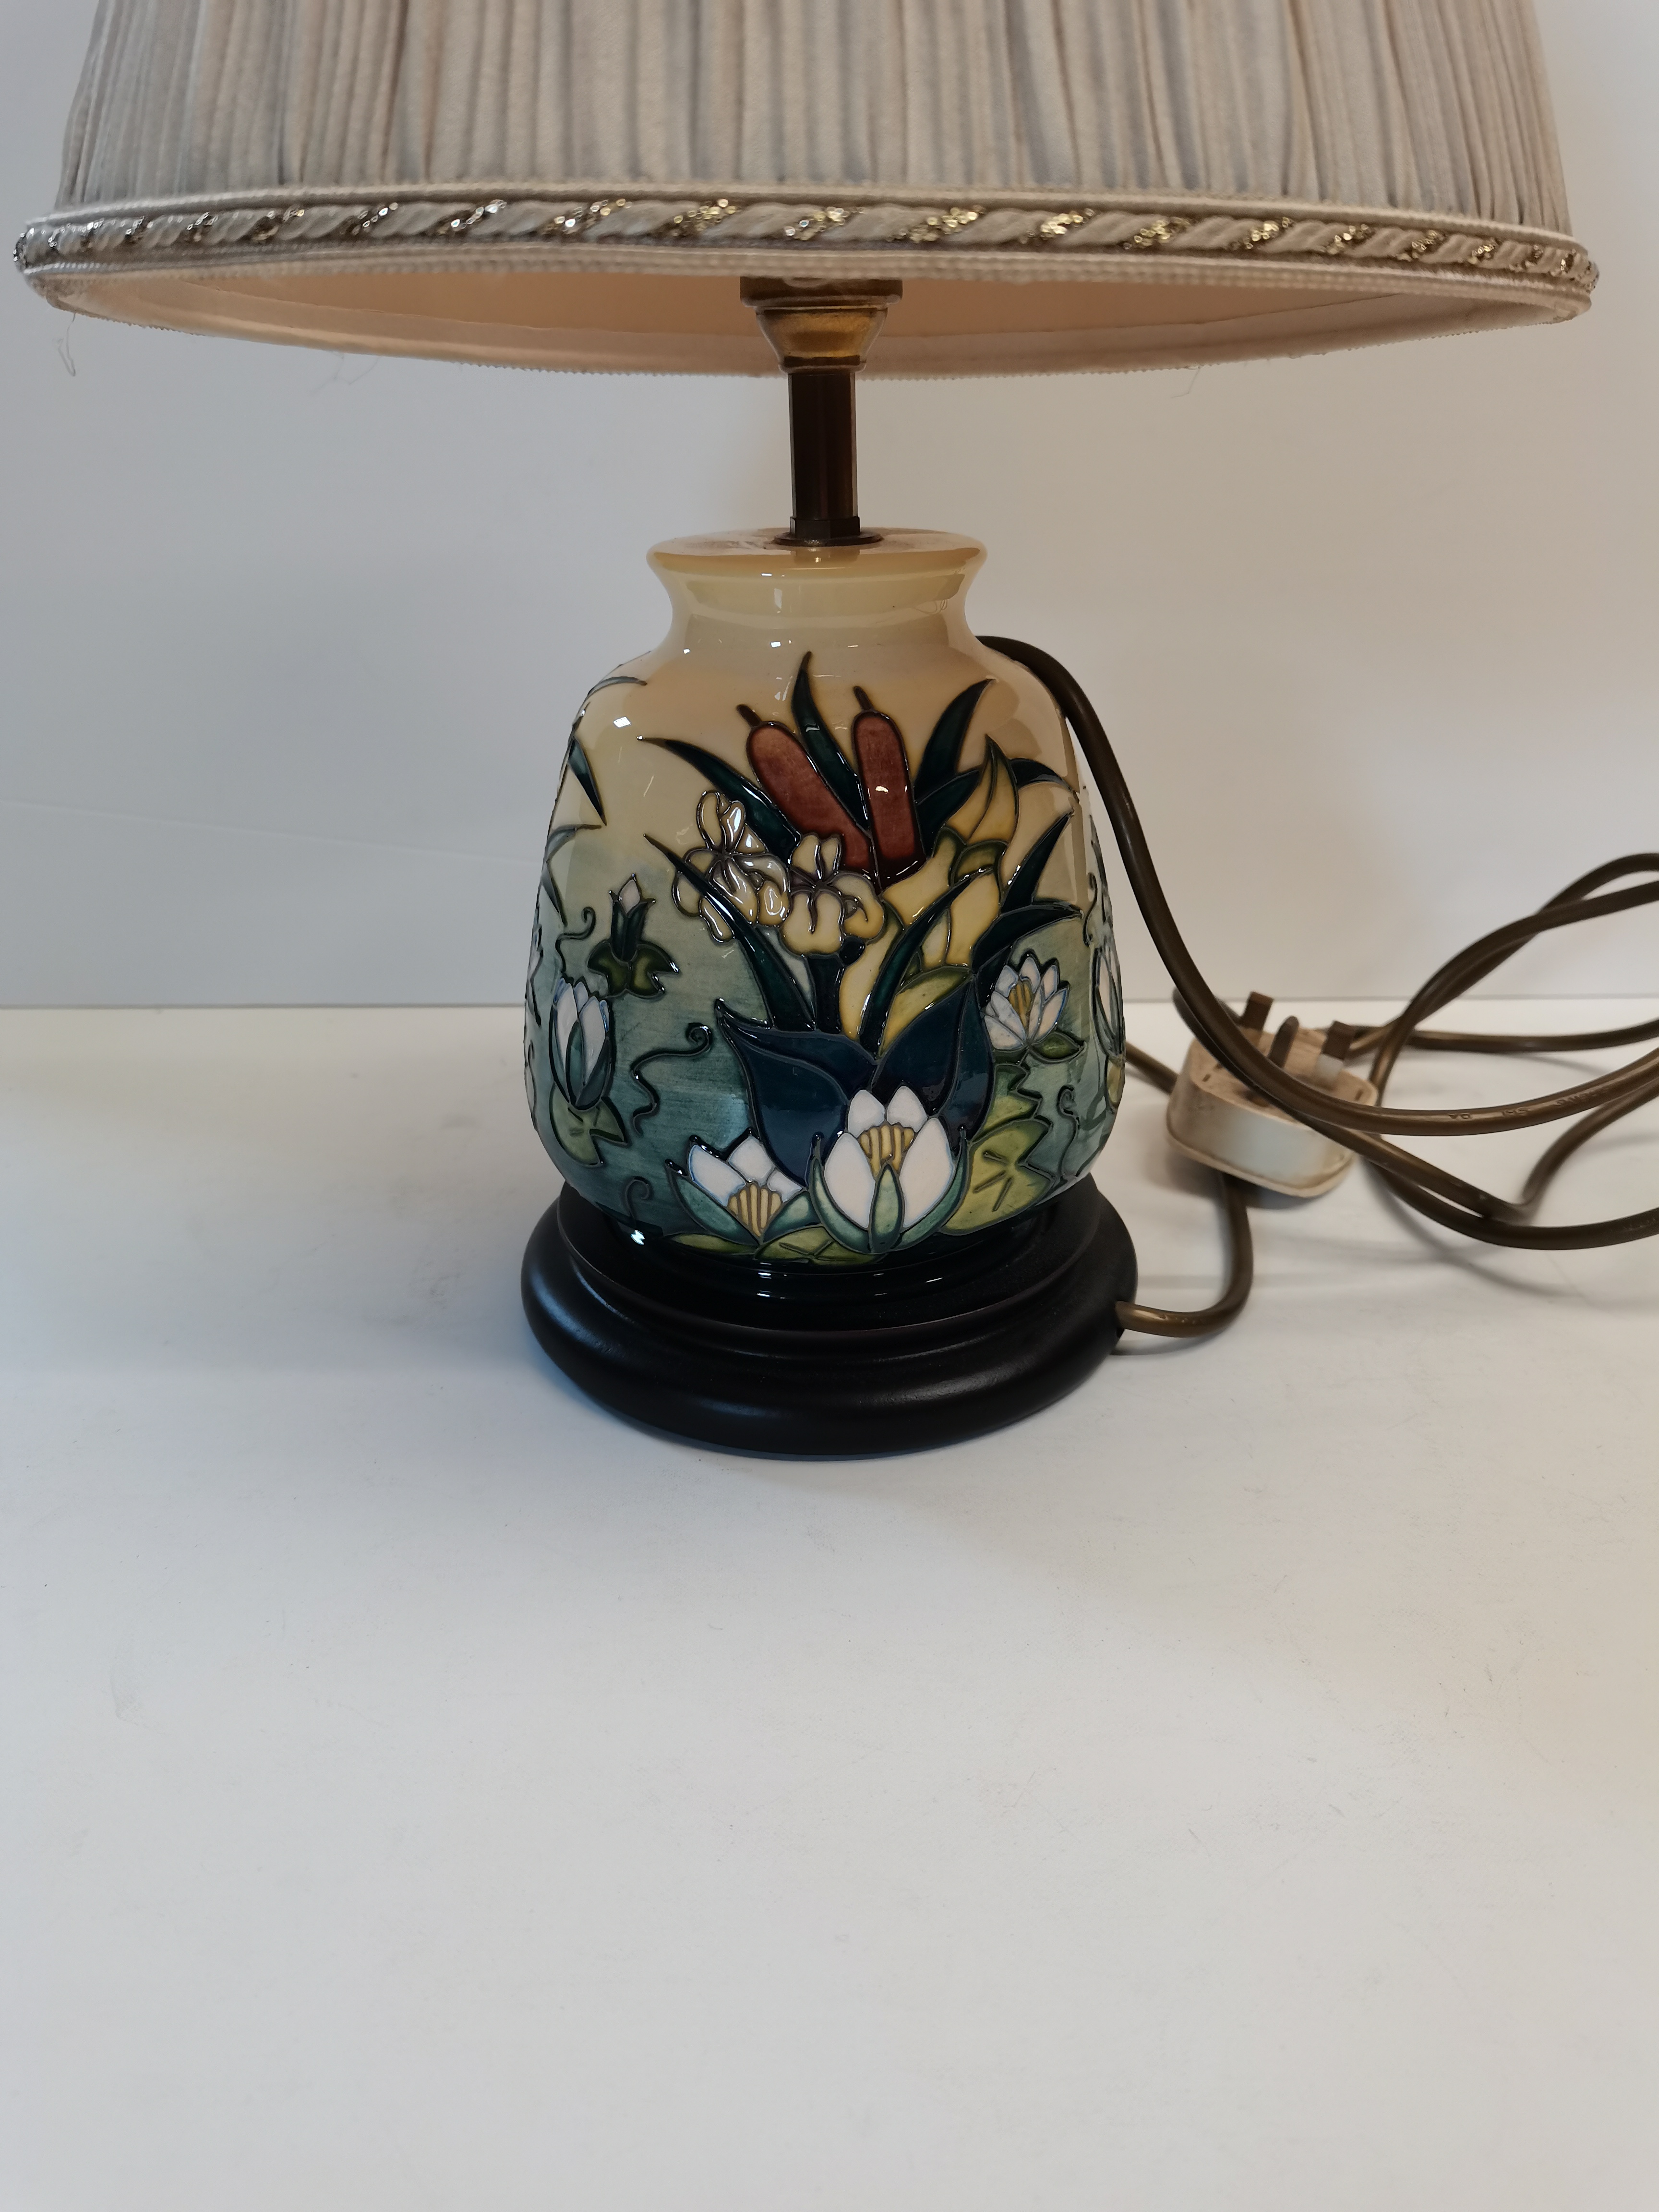 Moorcroft table lamp - Image 4 of 4